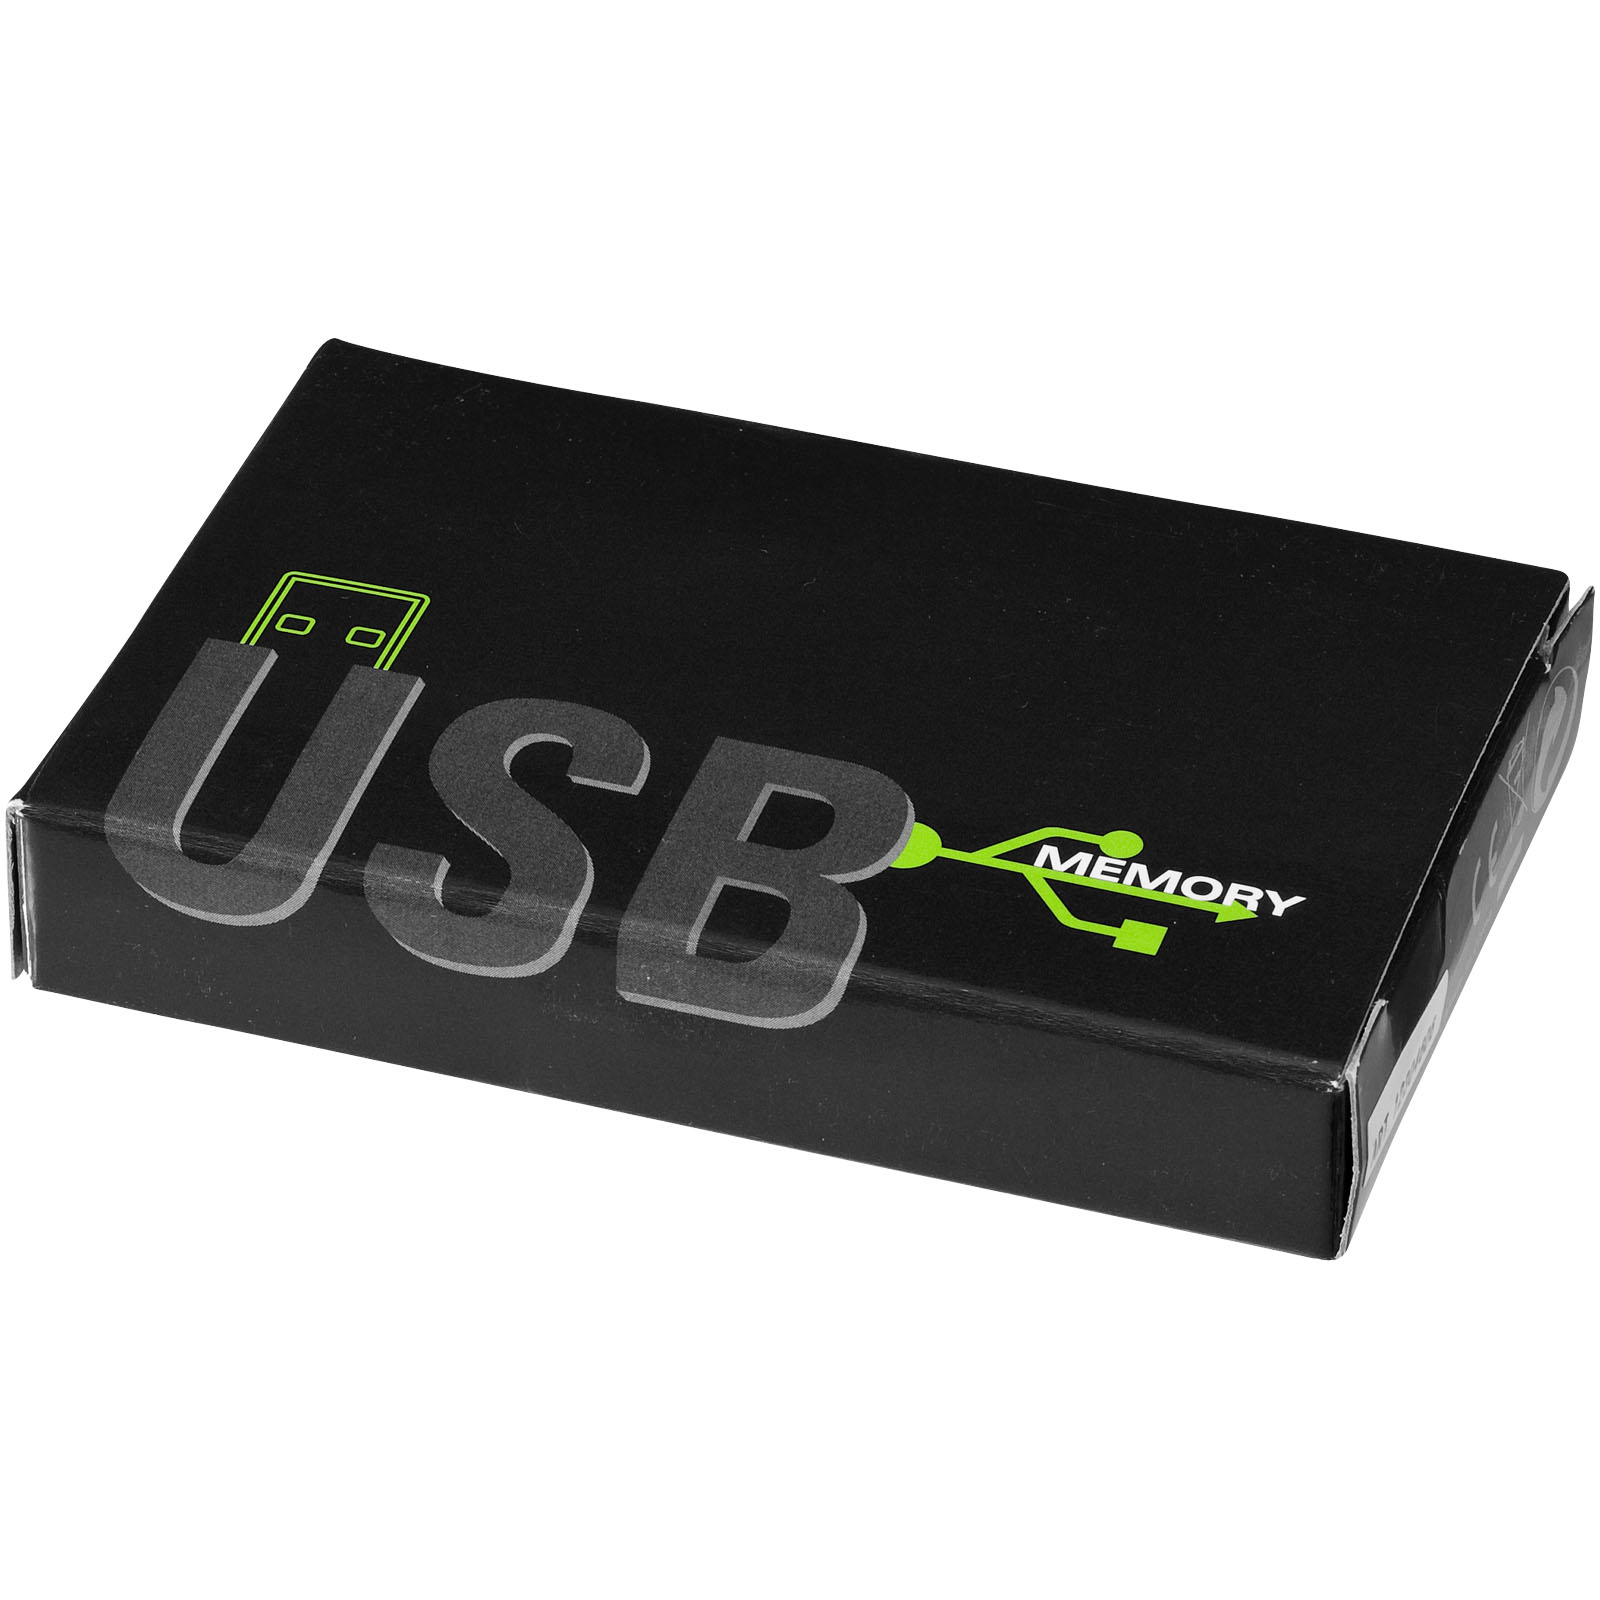 Advertising USB Flash Drives - Slim card-shaped 4GB USB flash drive - 1